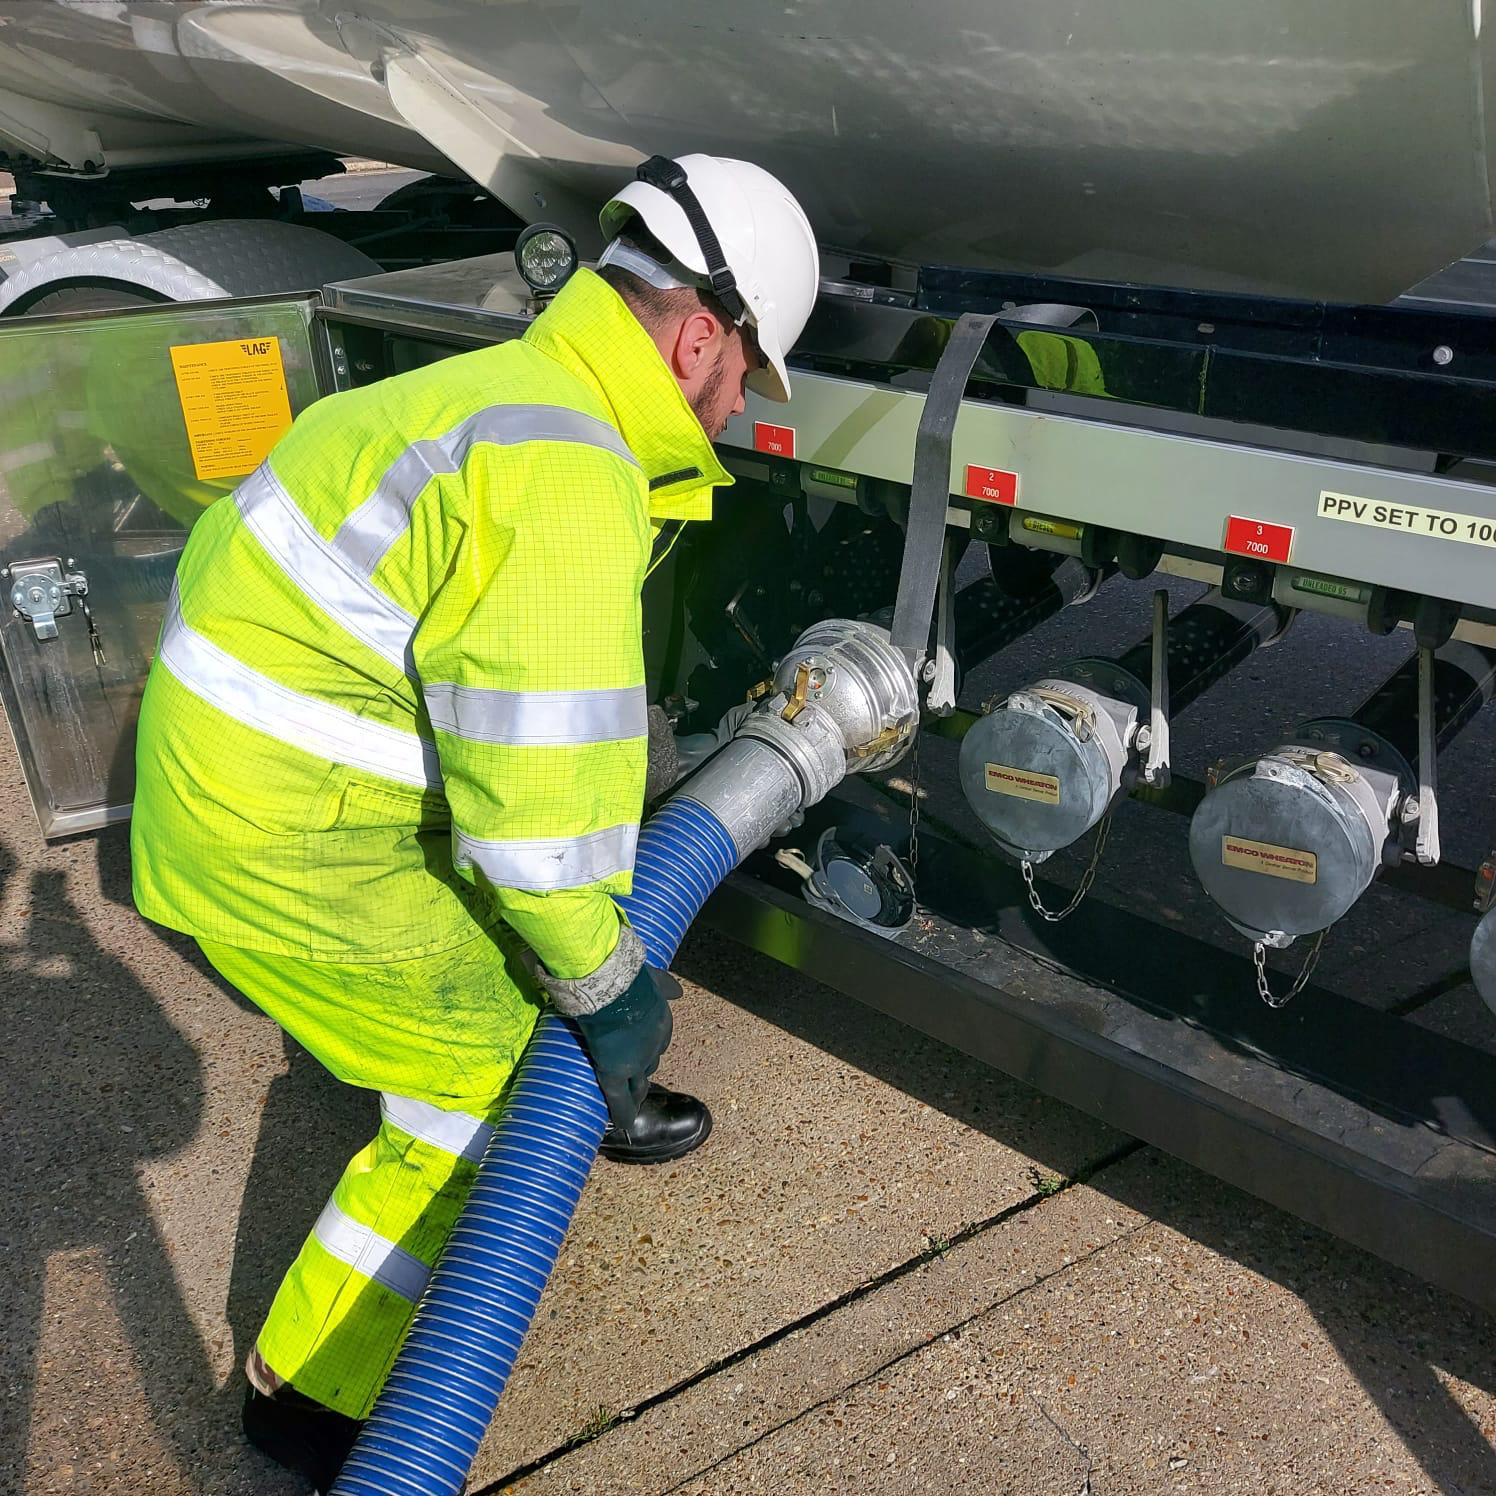 RAF Logistics Driver refuels Lorry with petrol pump..